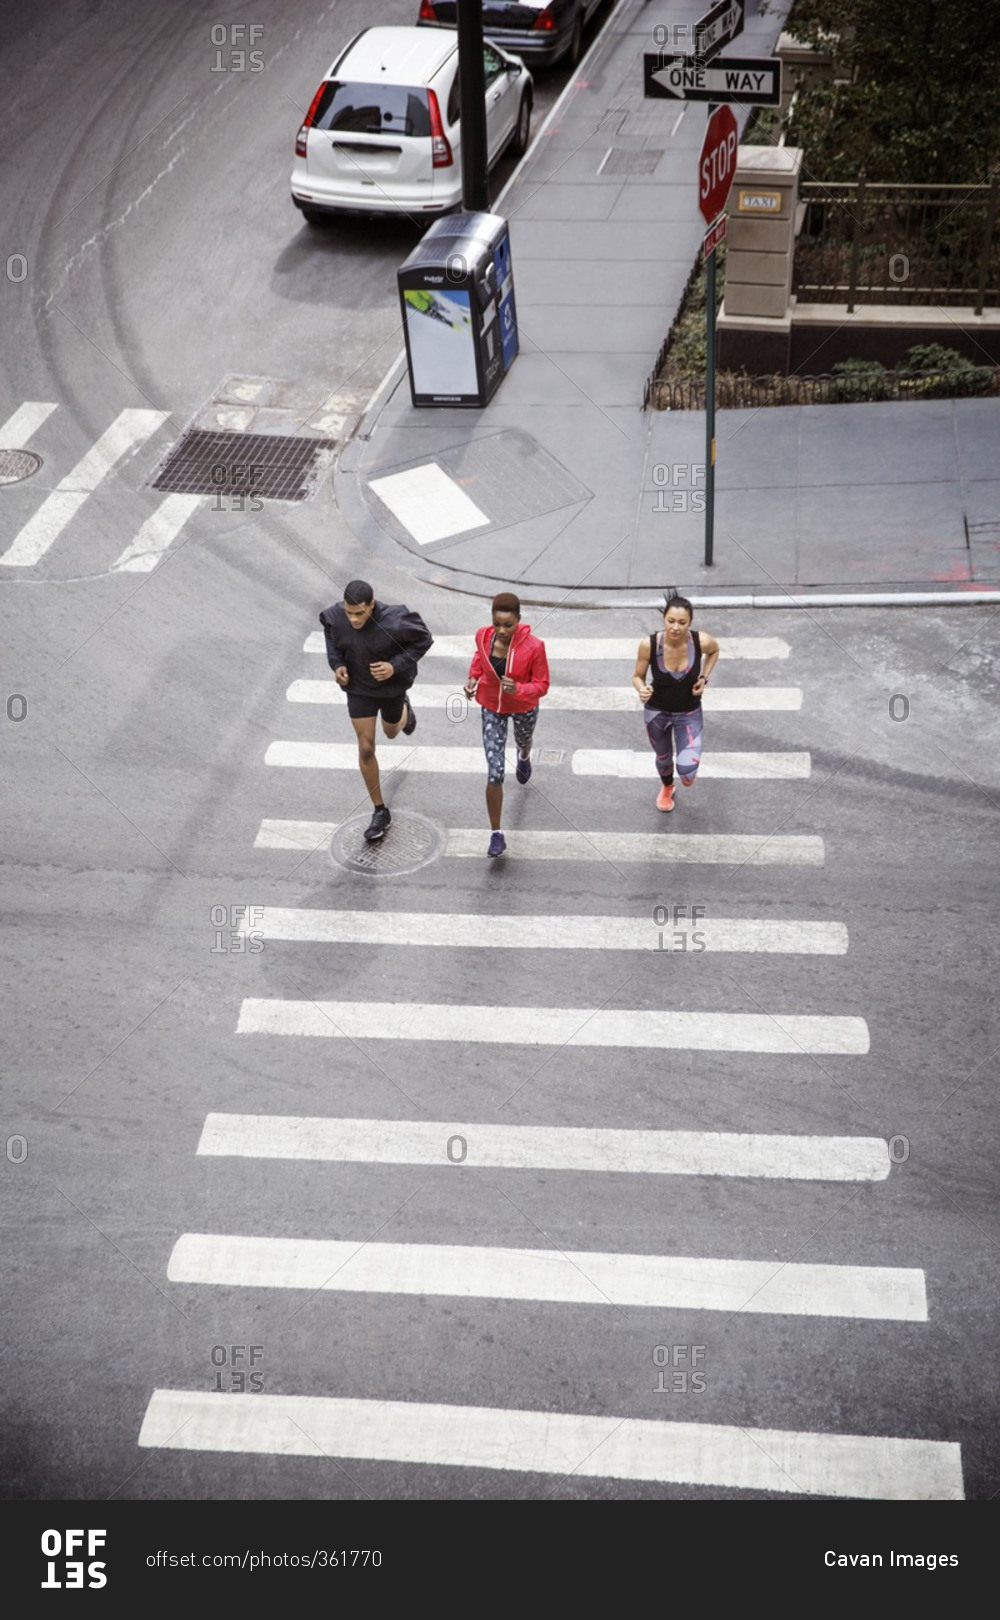 Overhead view of athletes running on zebra crossing on city street